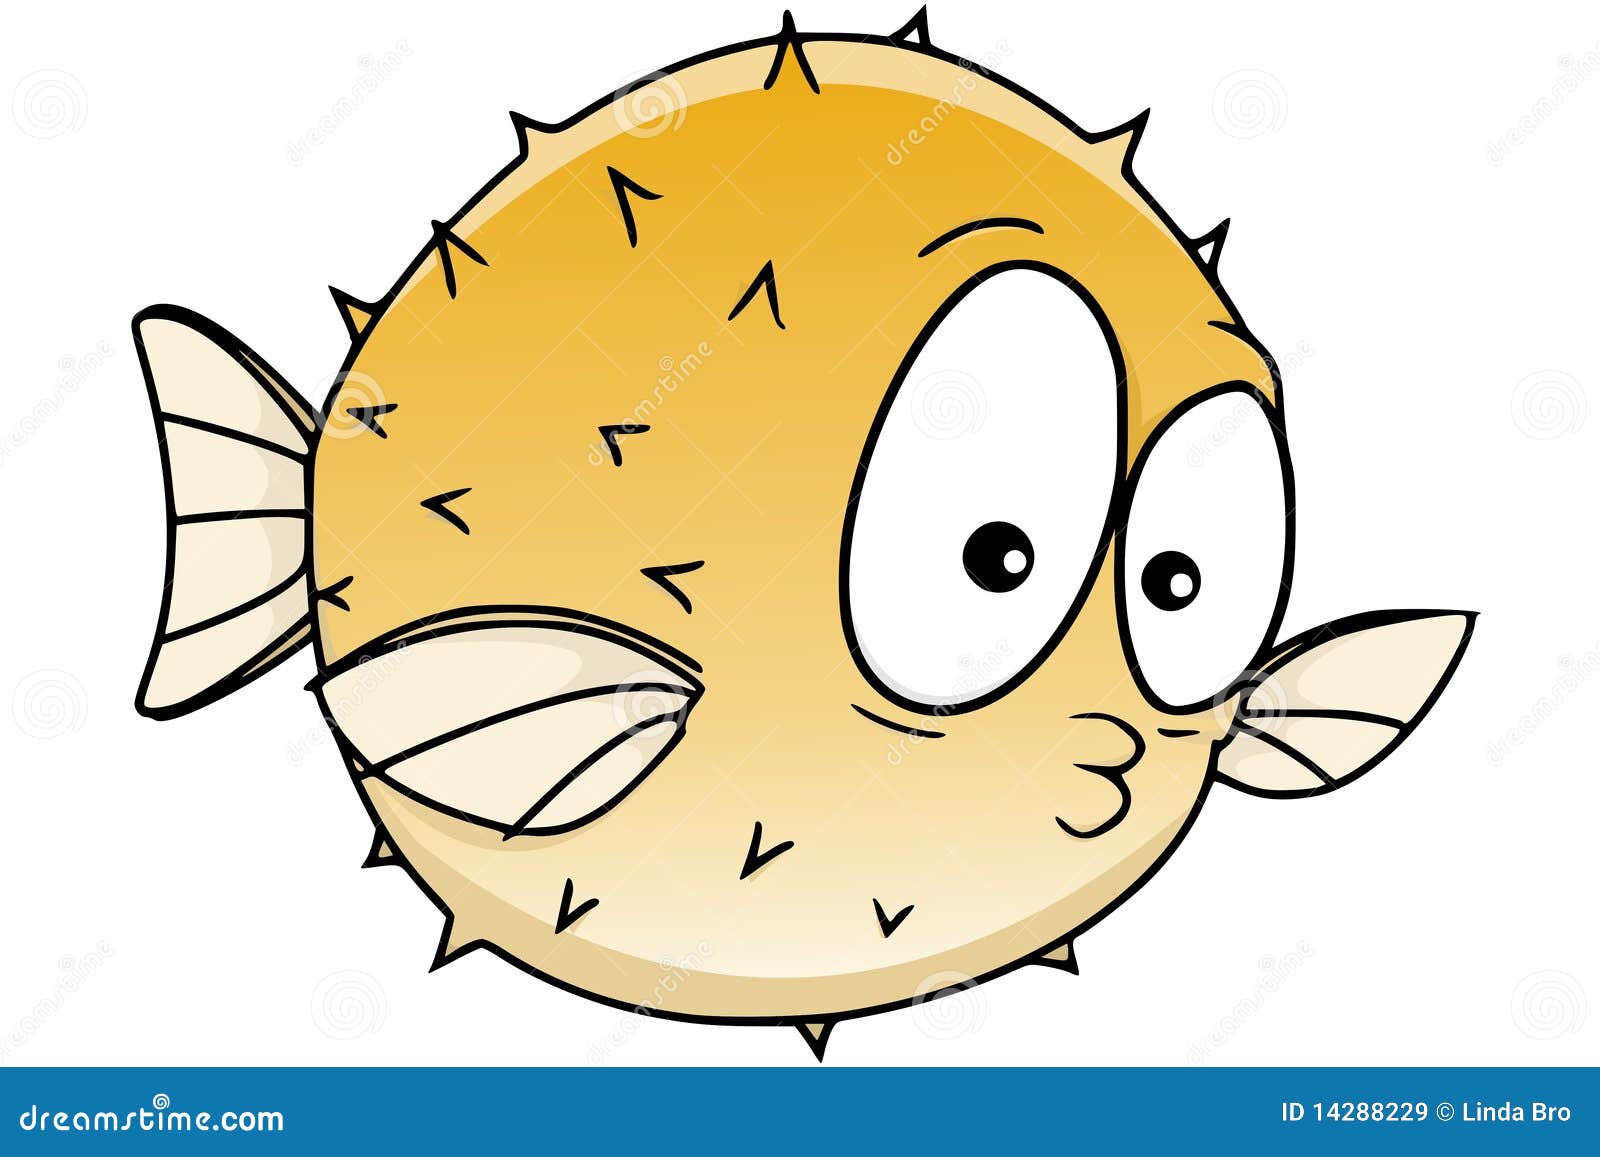 free puffer fish clip art - photo #36